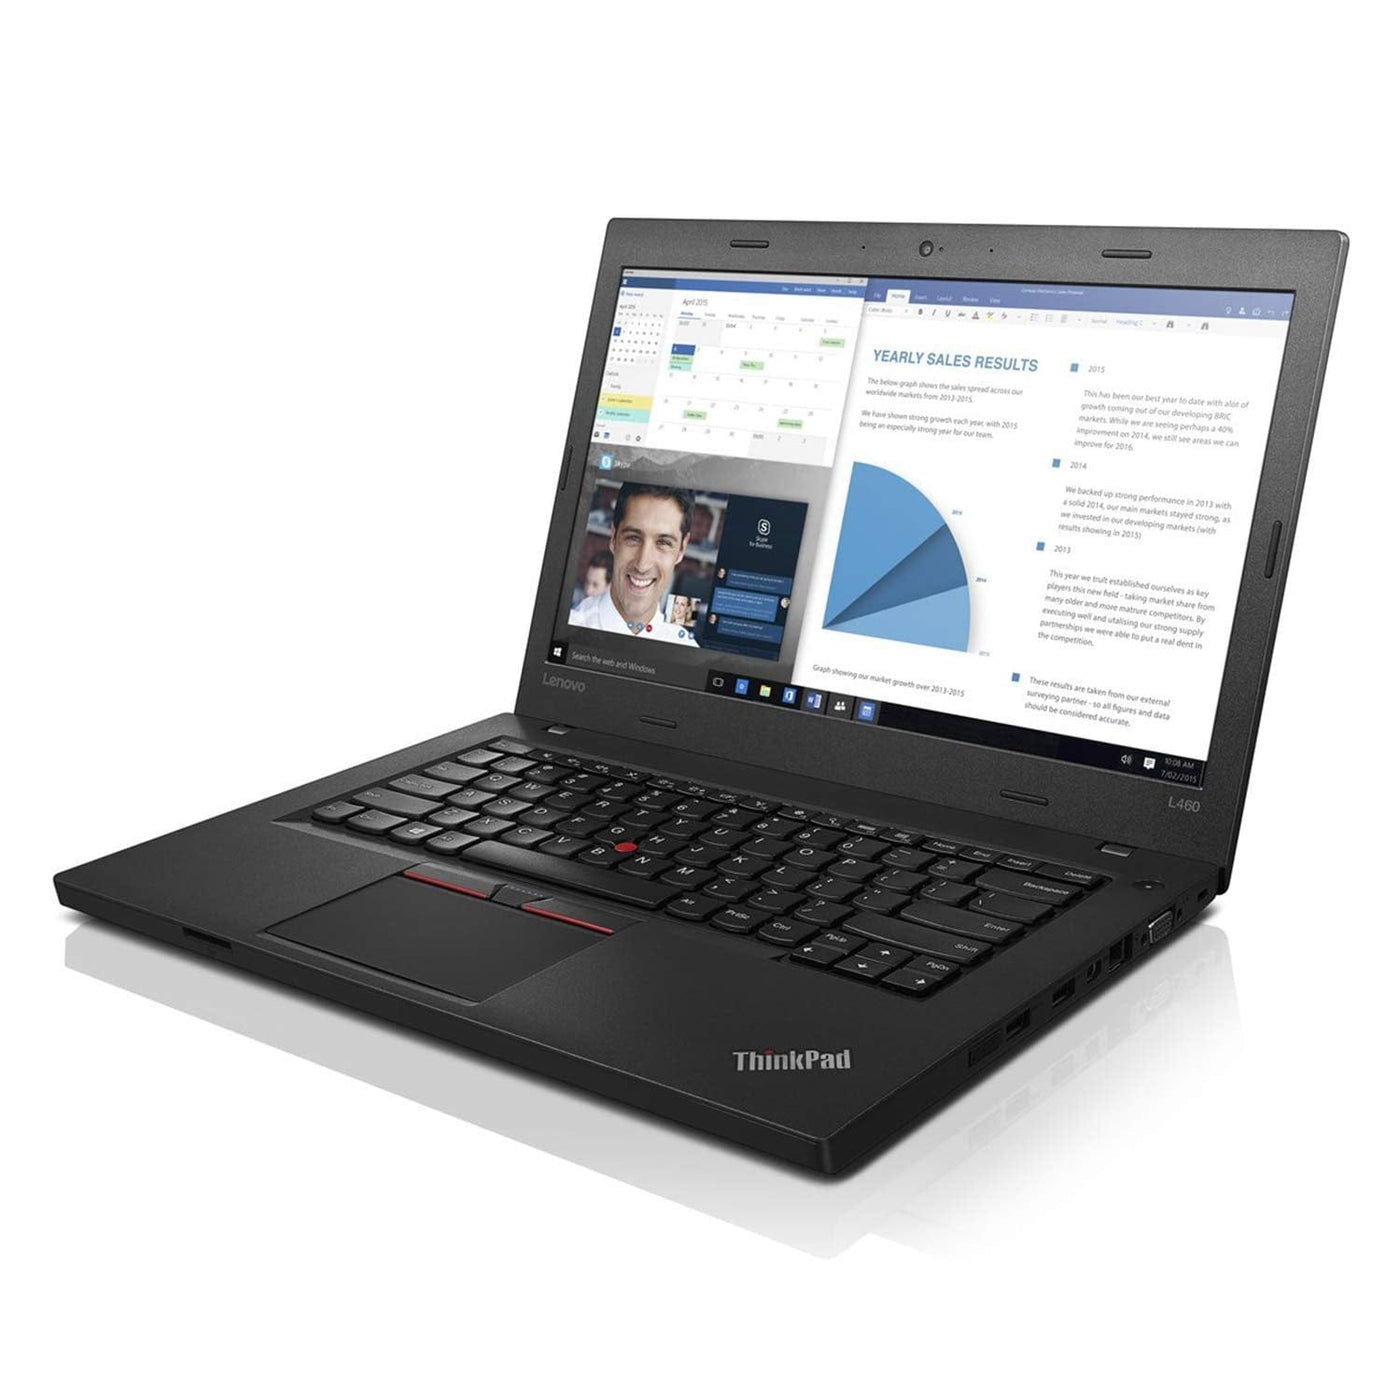 SmartTechShopping Lenovo ThinkPad L460 Laptop (CORE I5 6TH GEN/8GB/256GB SSD/WEBCAM/14''/DOS)